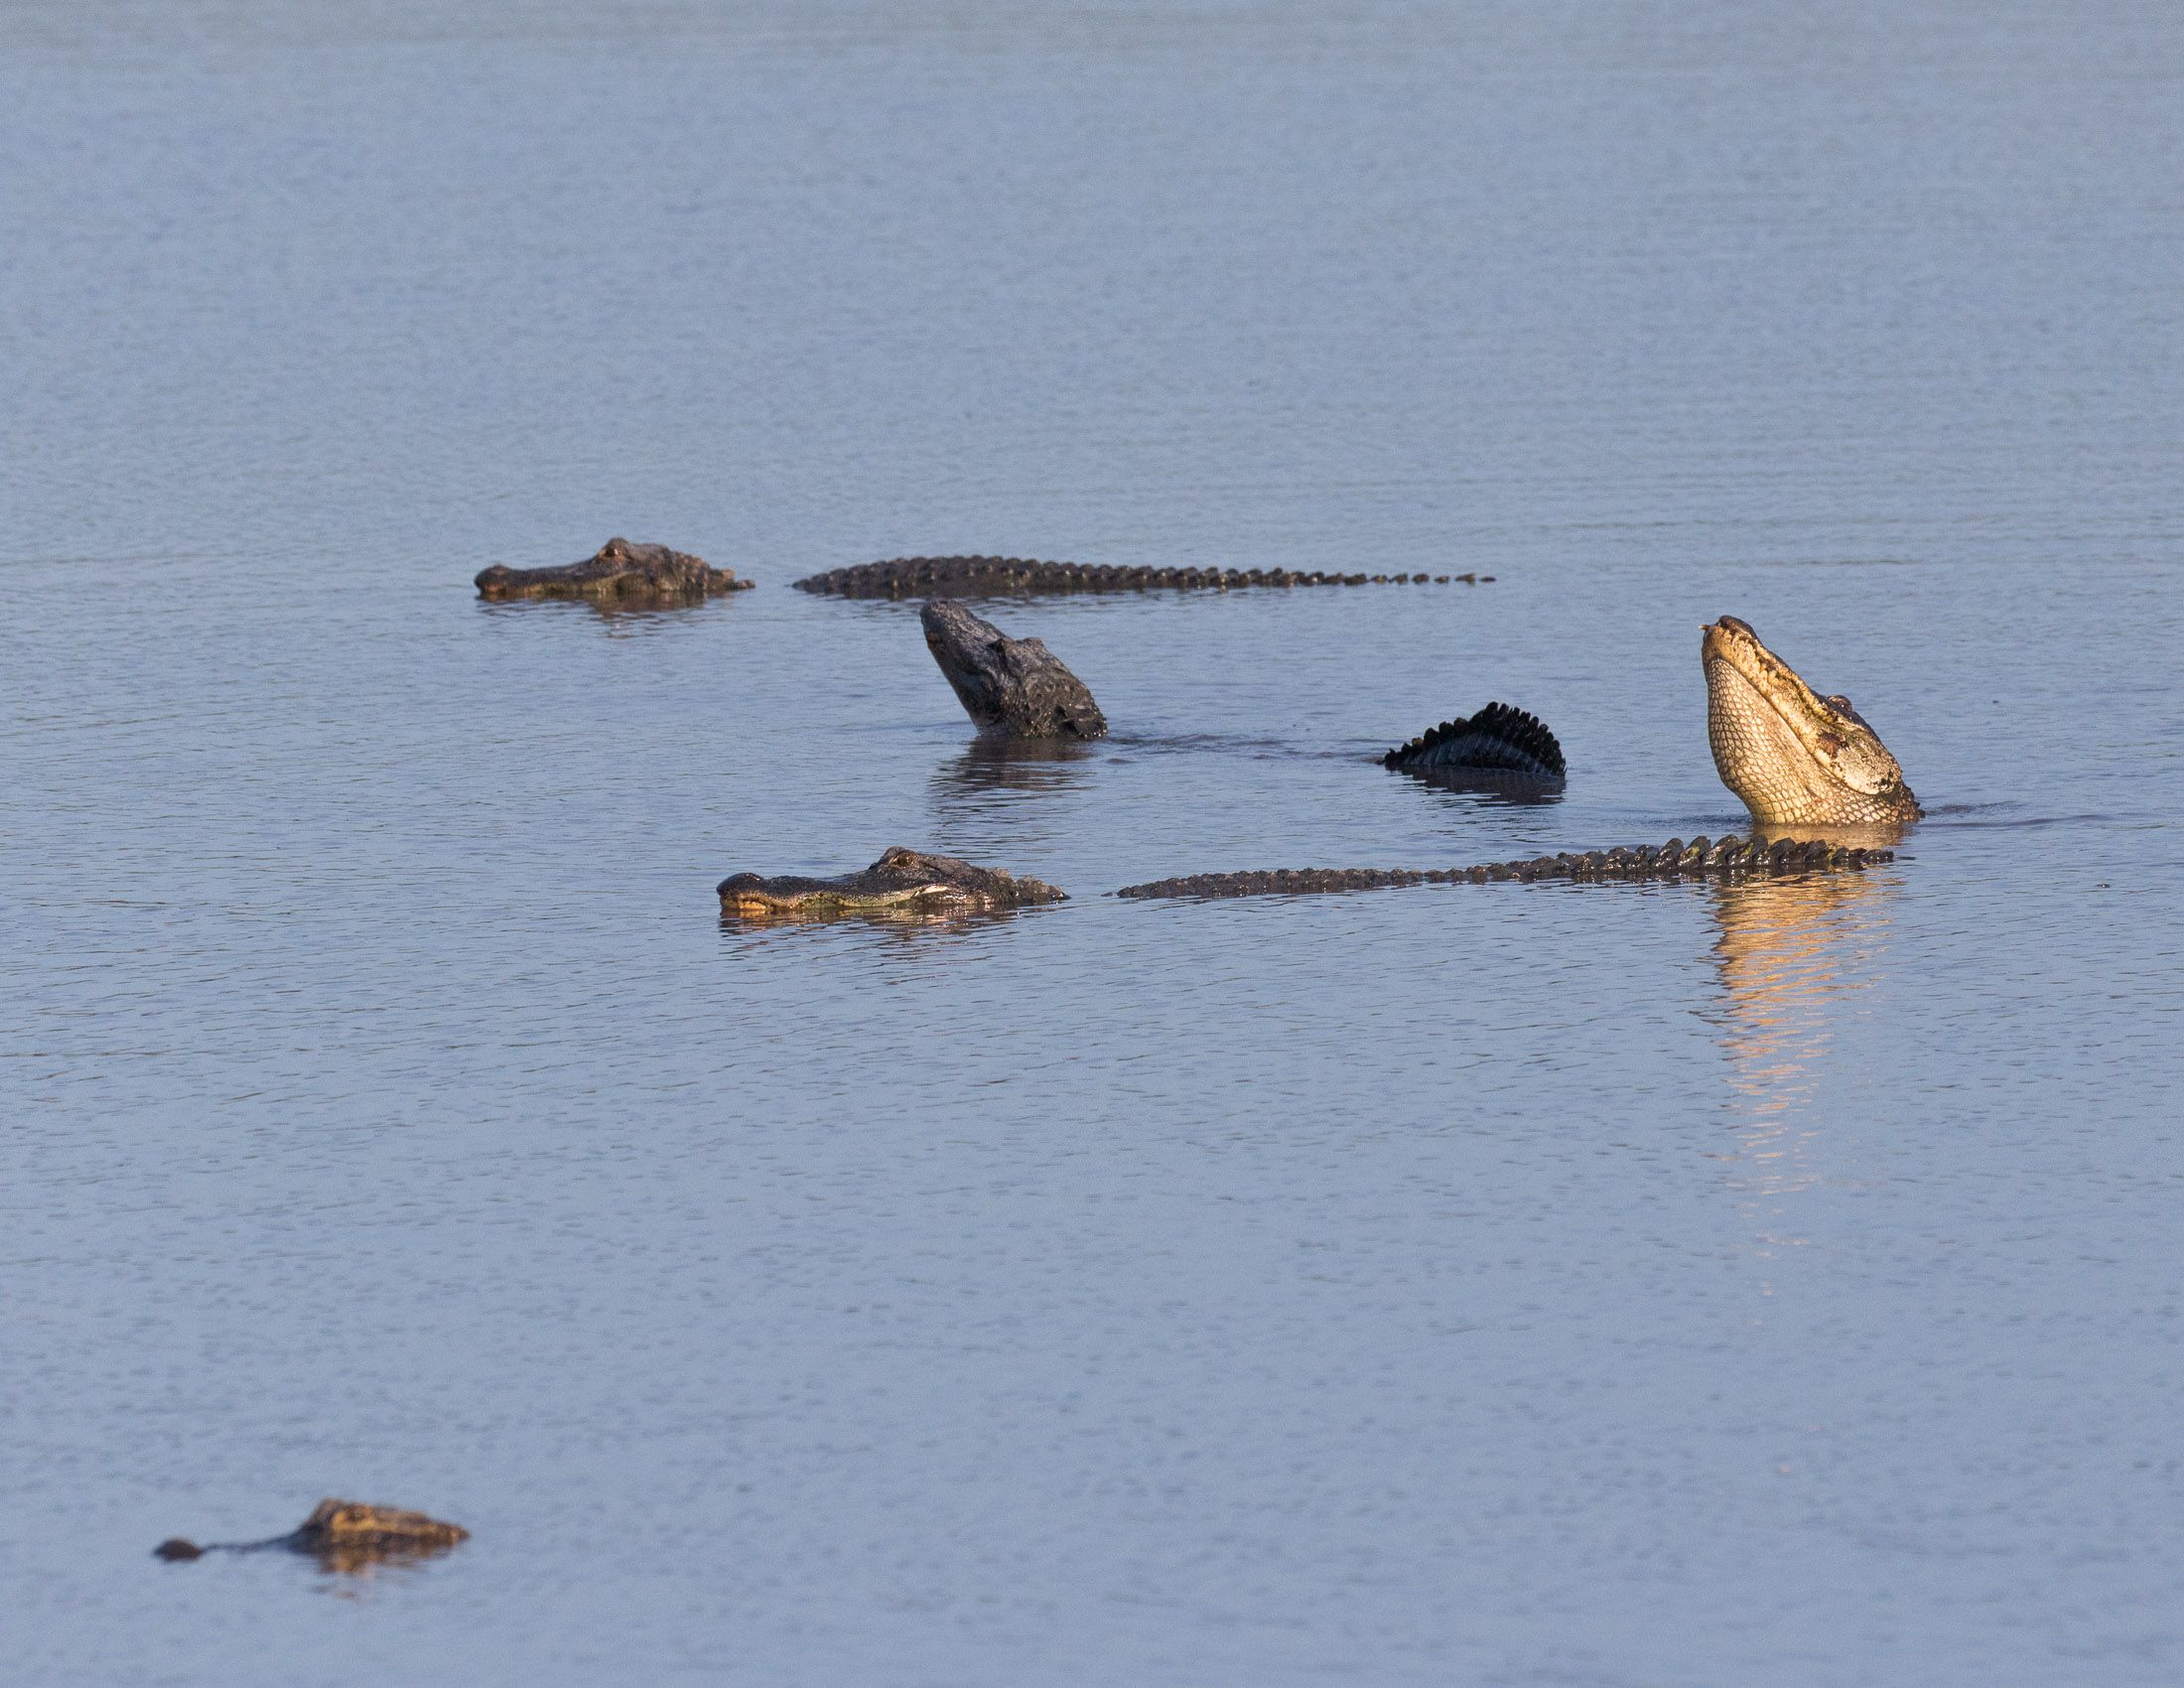 Alligators of Ace Basin, South Carolina-13.jpg